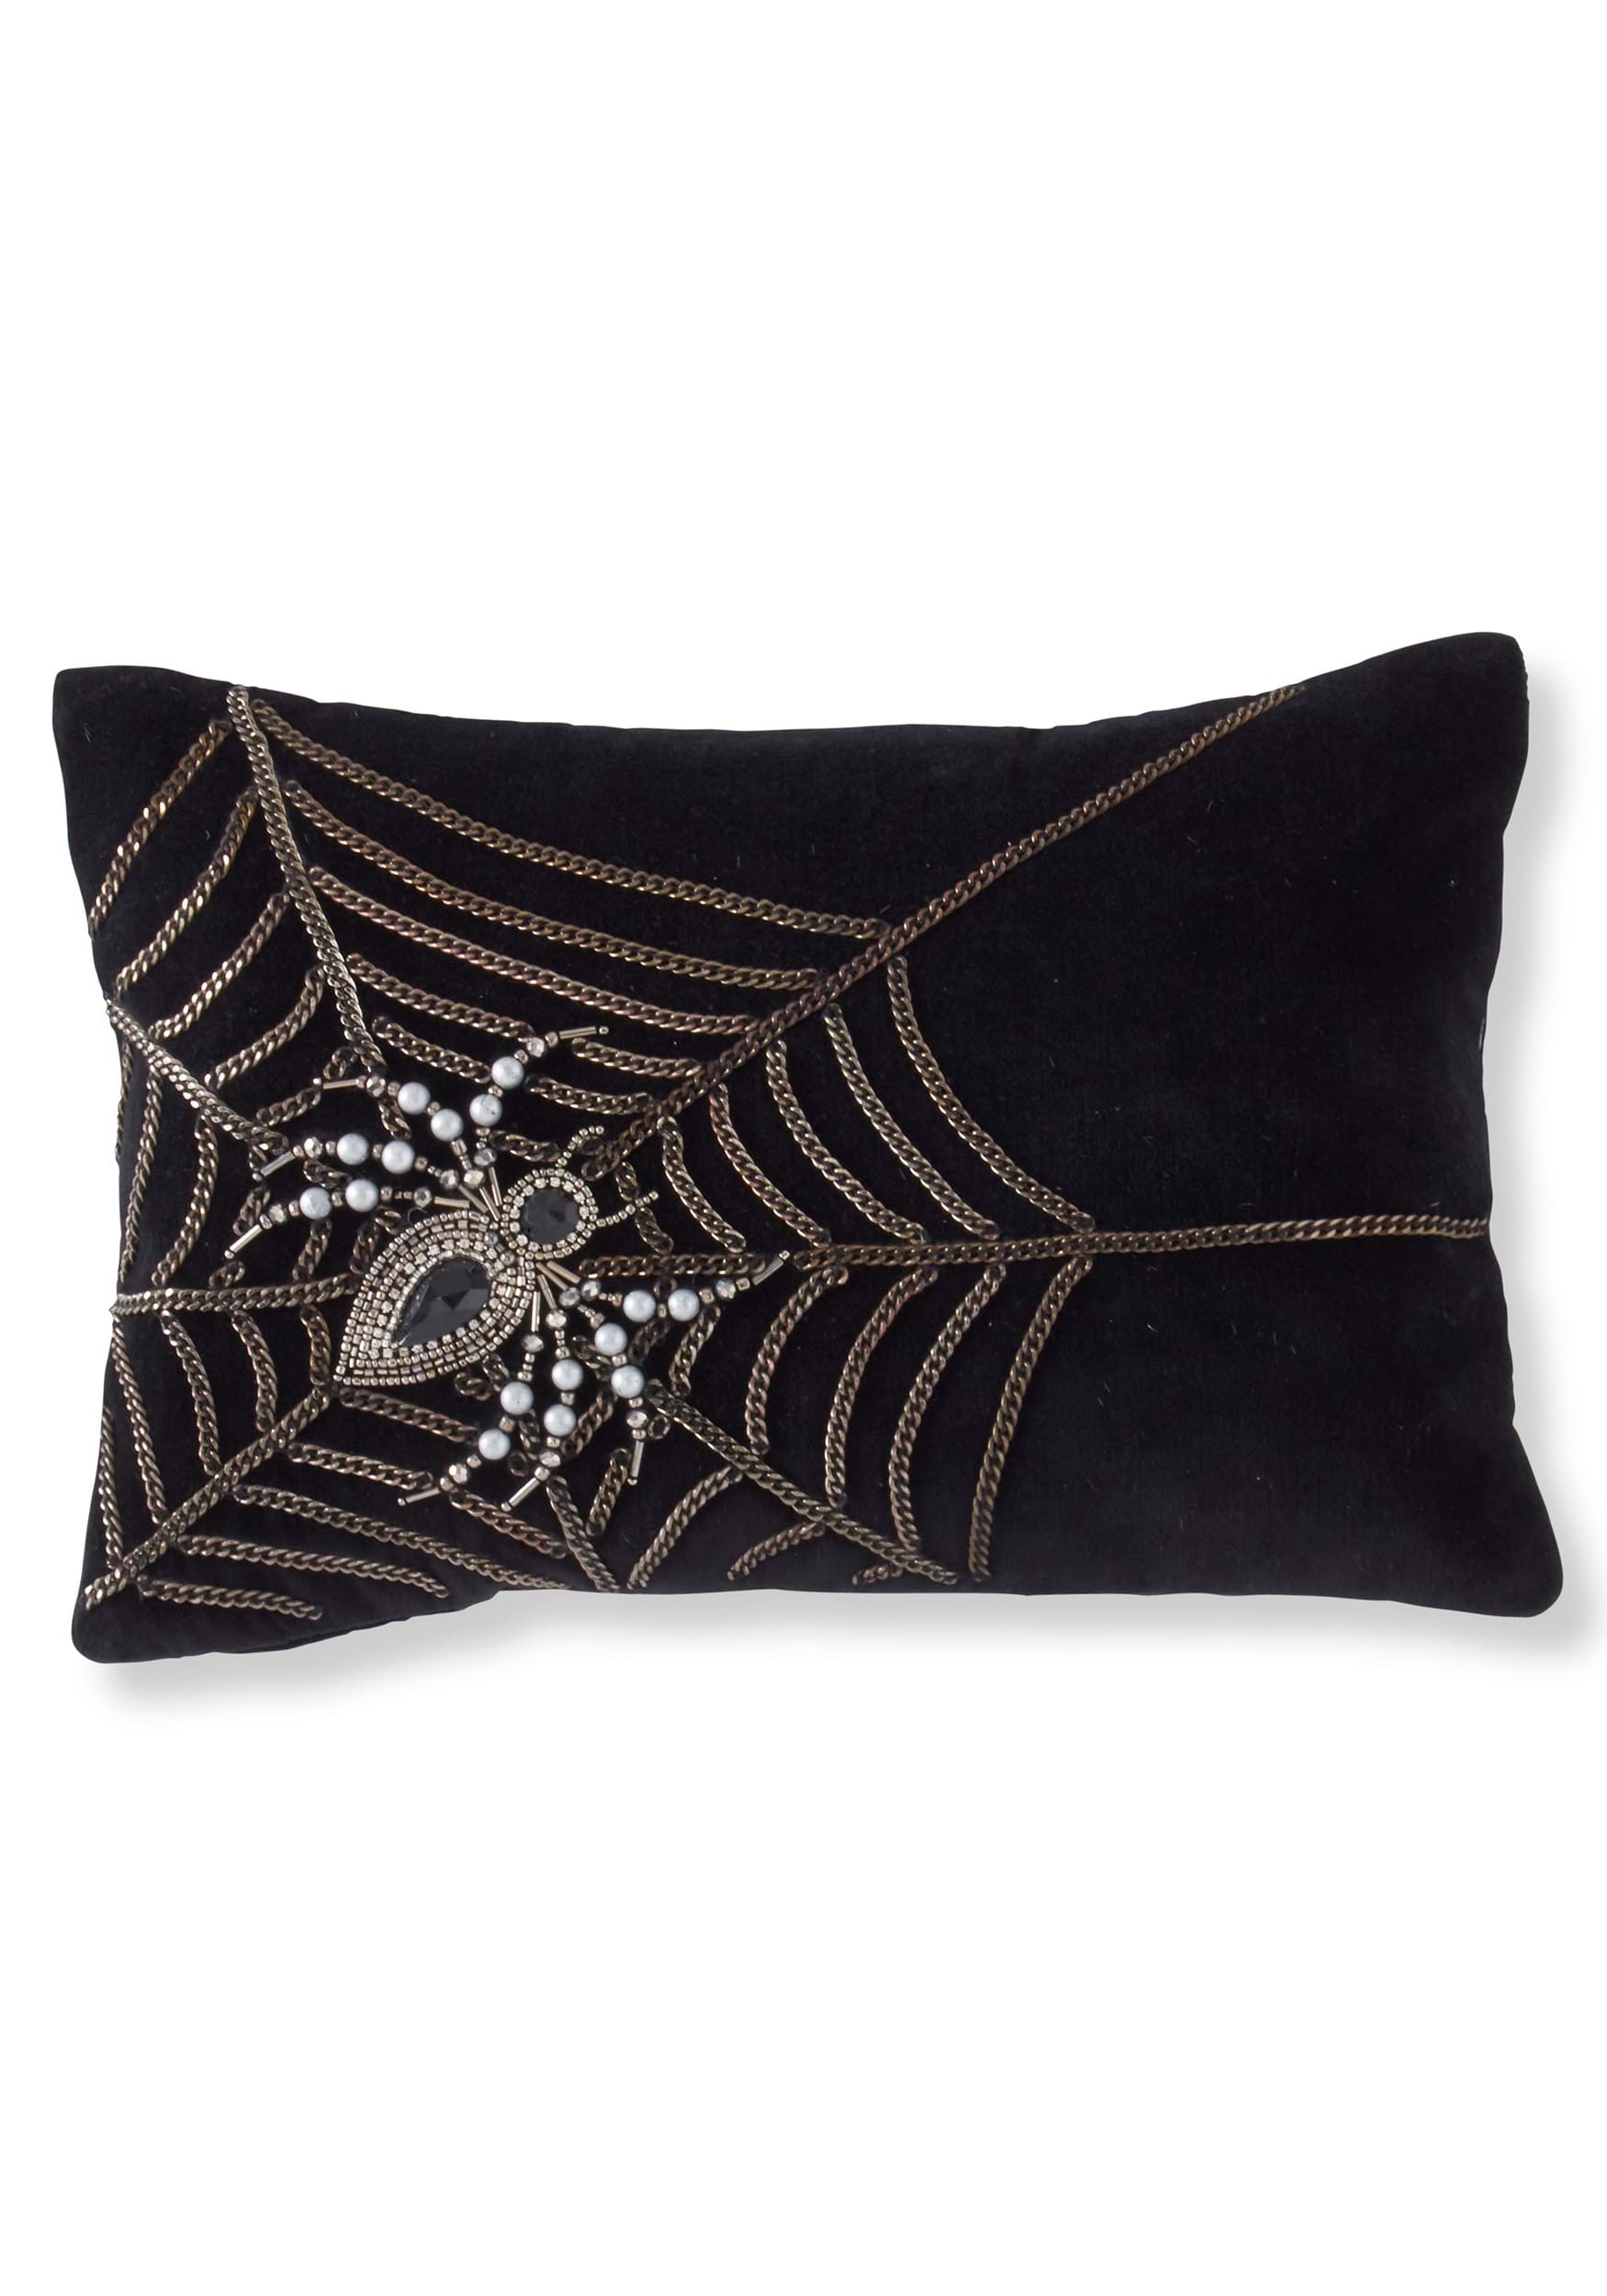 14 Inch Black Velvet Pillow with Chain Web & Beaded Spider